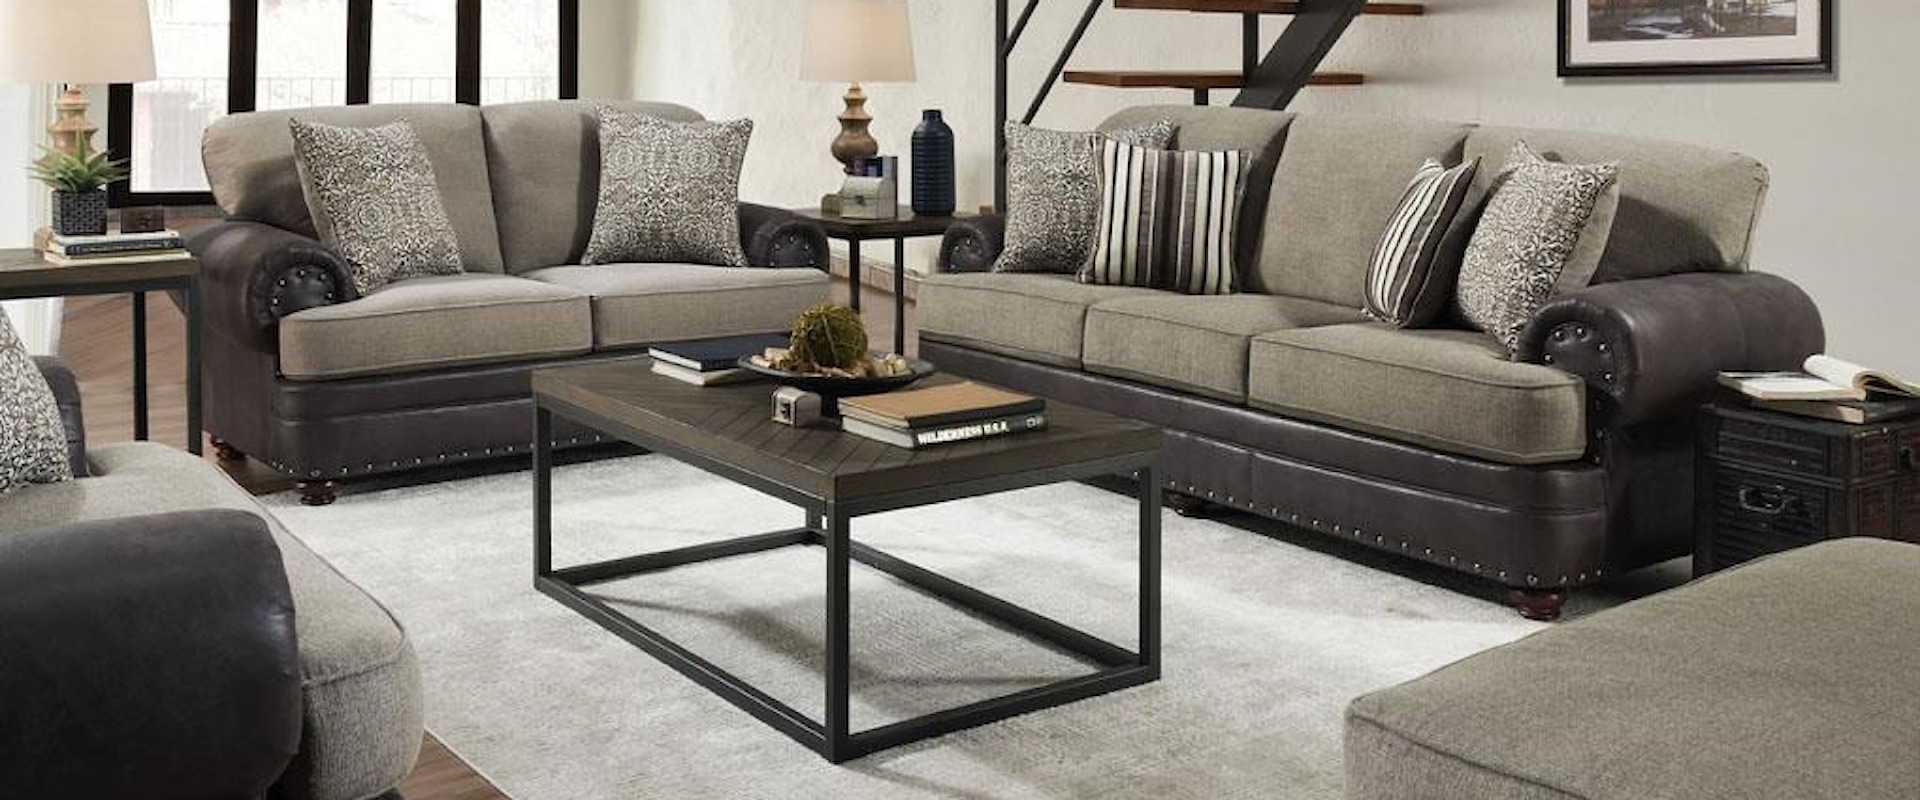 3 Piece Living Room Group w/ Sofa, Loveseat & Chair